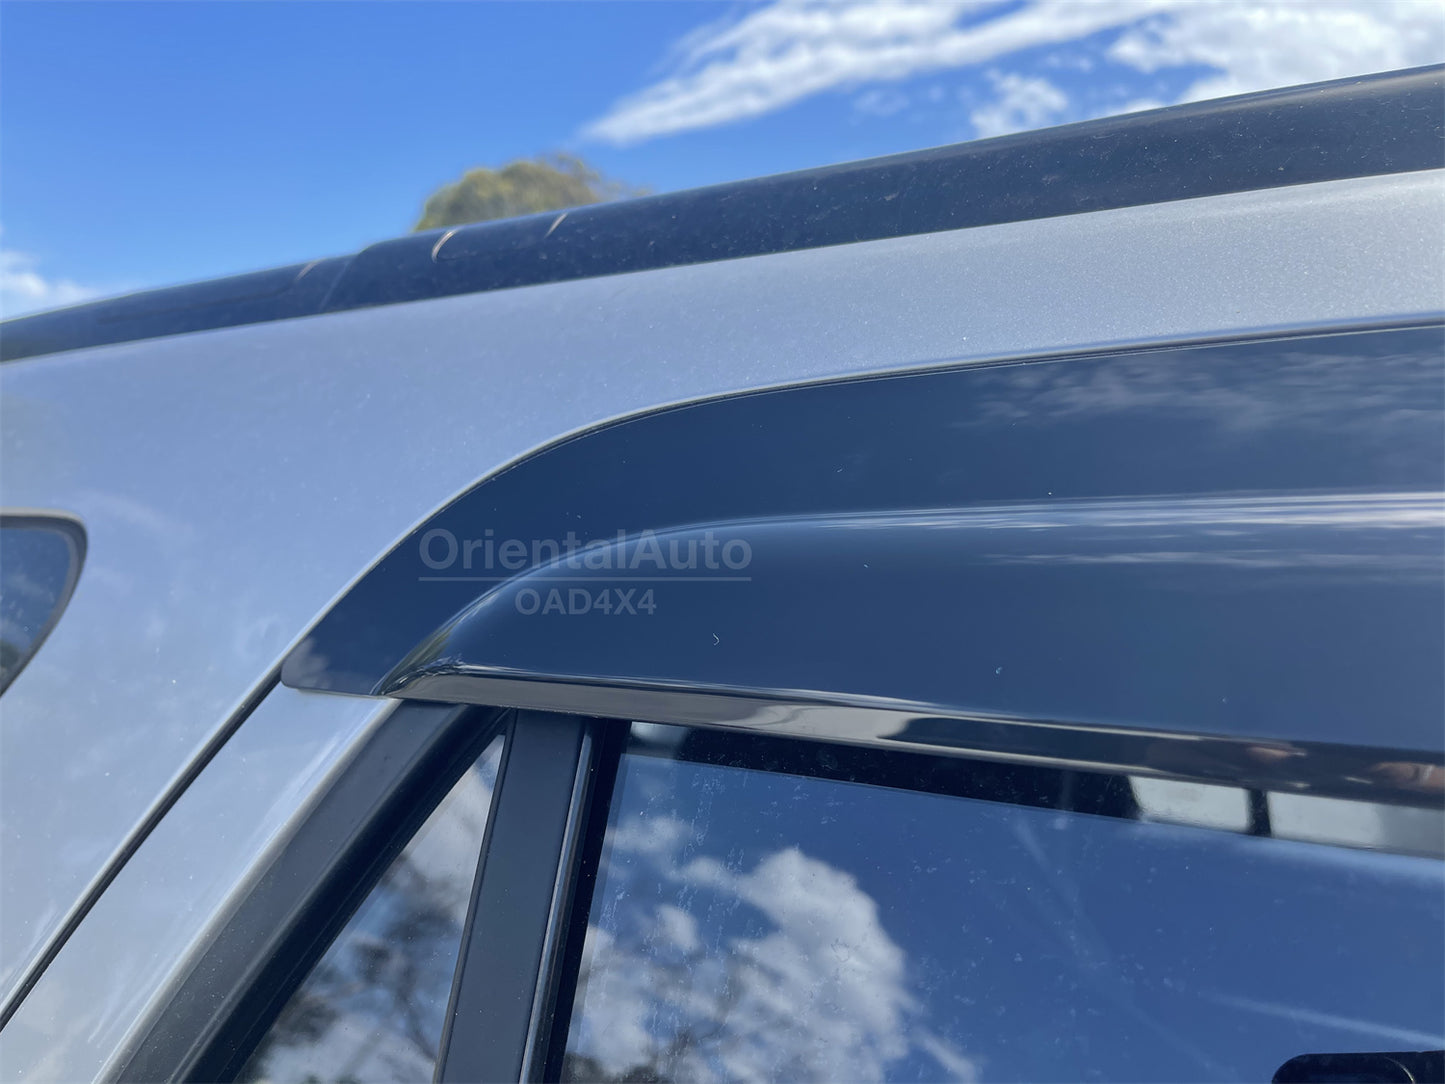 Luxury Weathershields Weather Shields Window Visor For Honda CRV RD Series 2002-2007